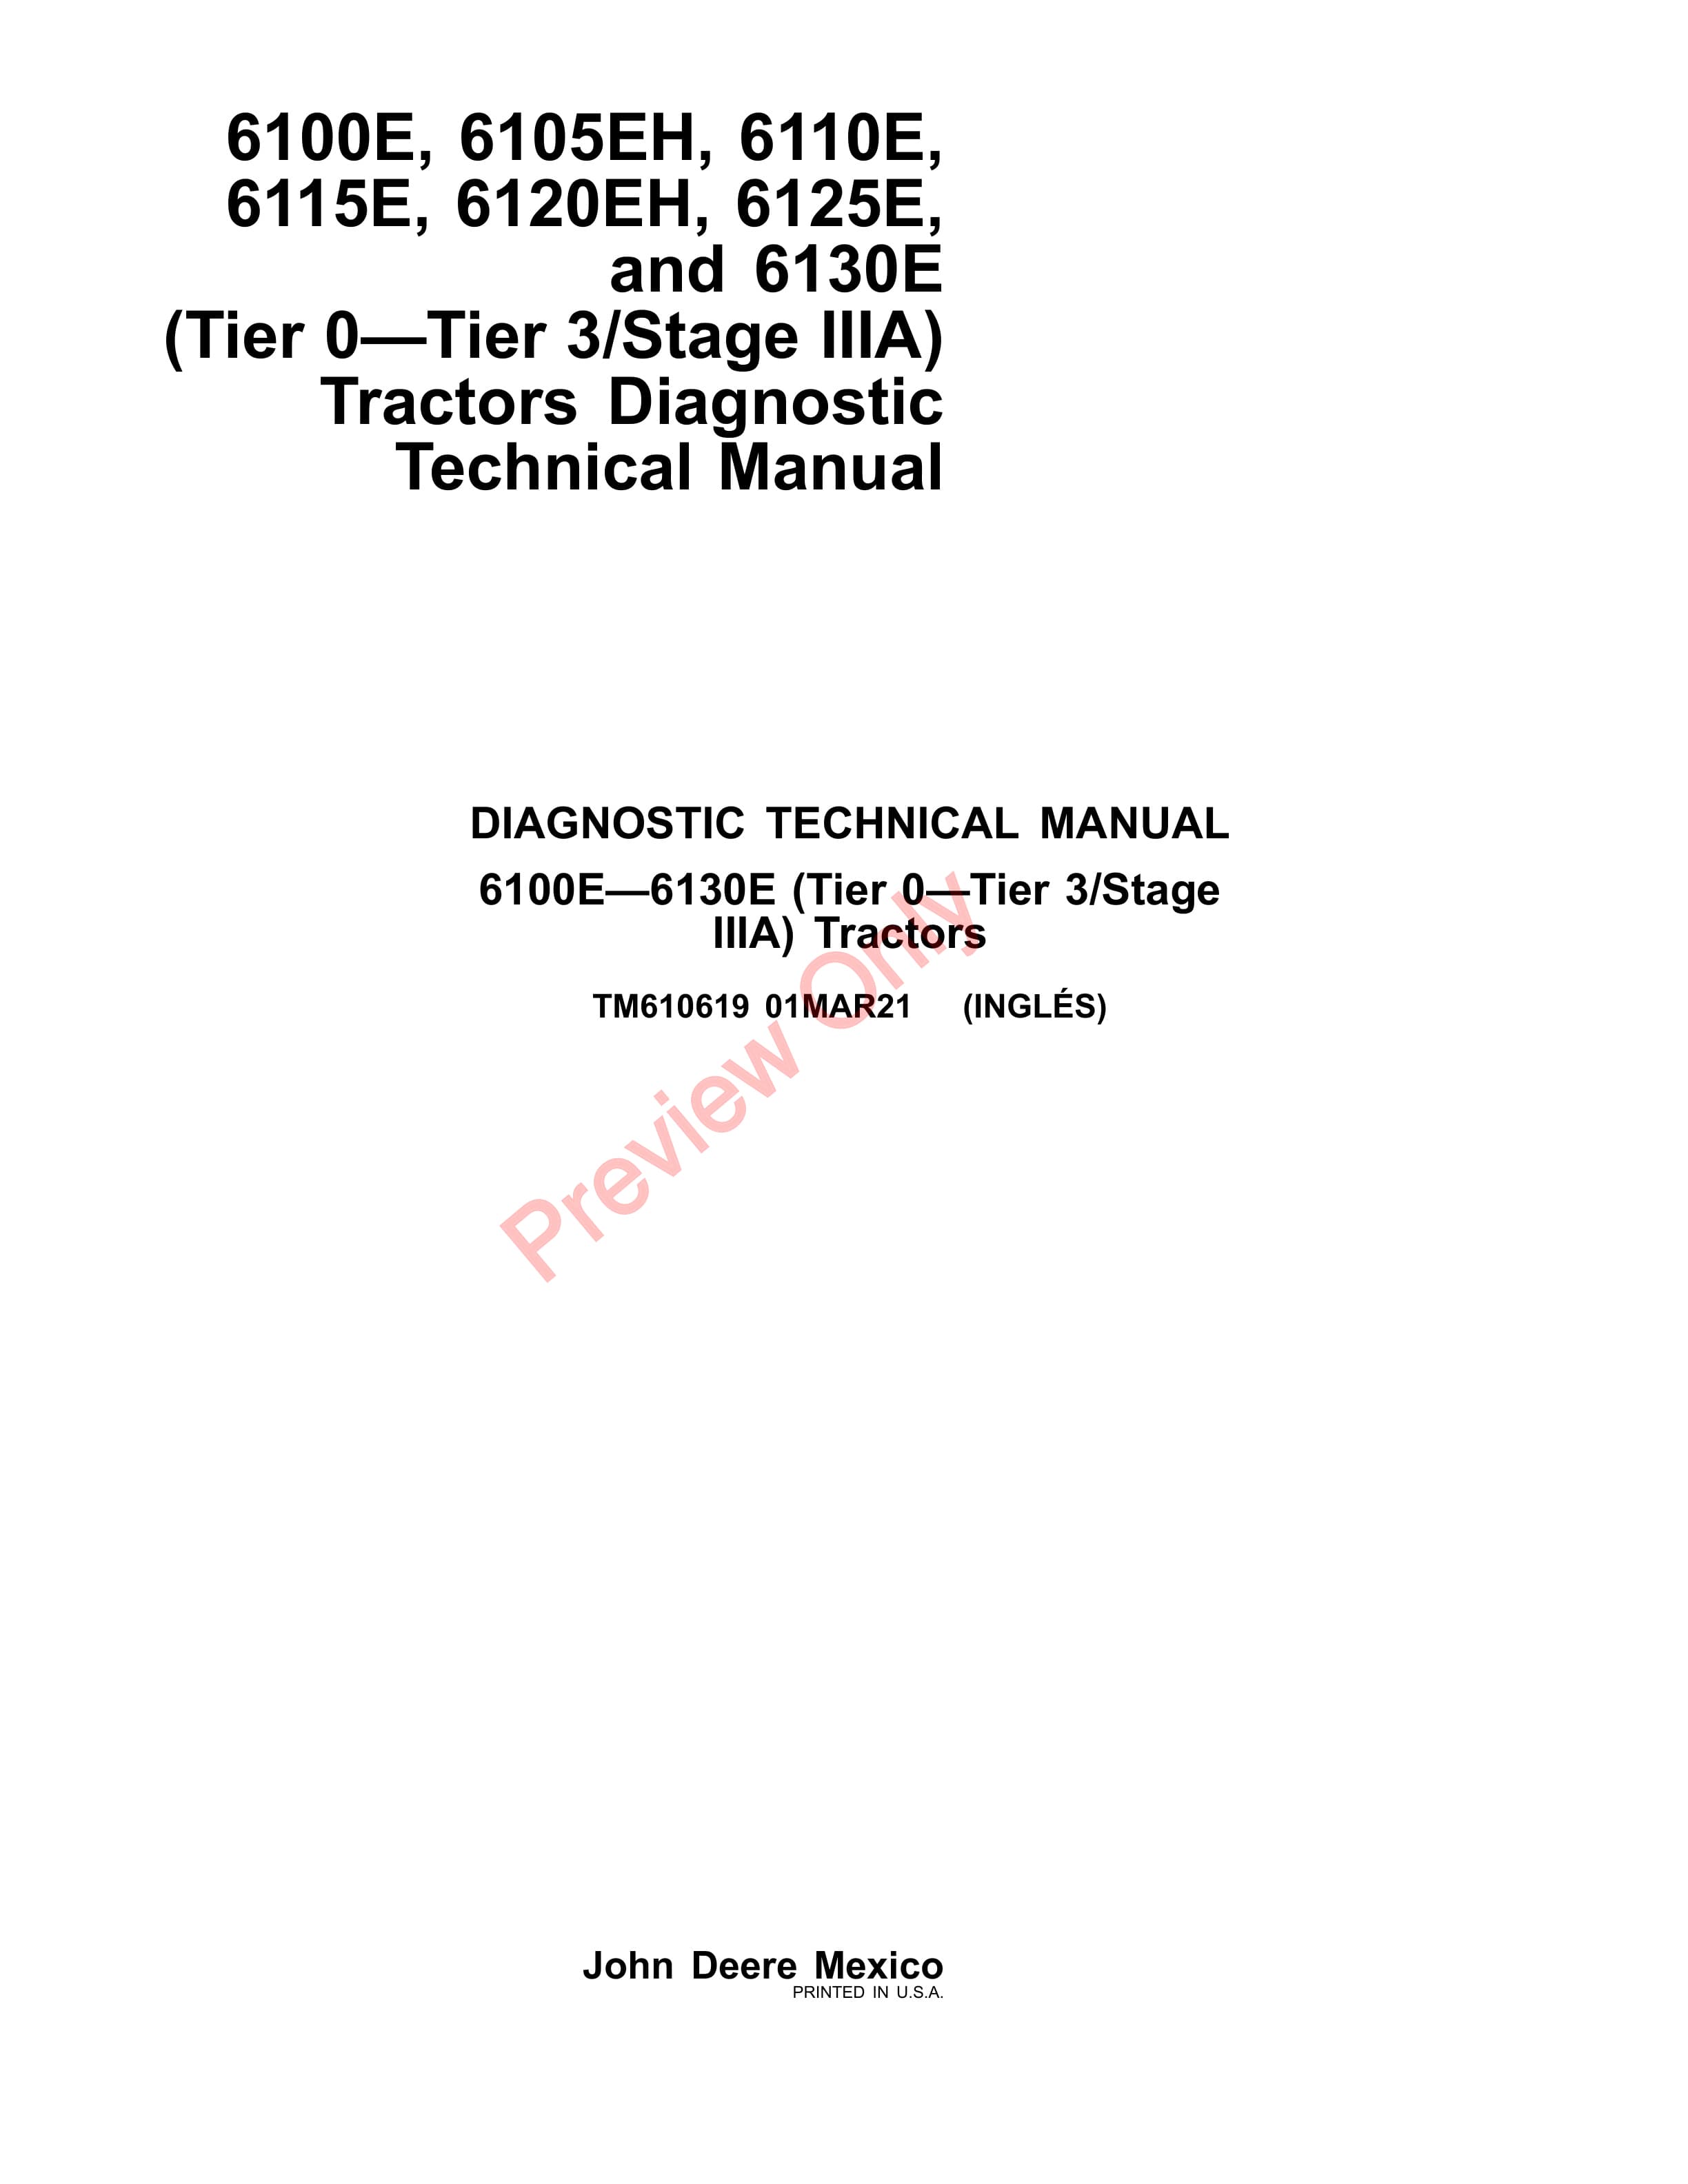 John Deere 6100E 6105EH 6110E 6115E 6120EH 6125E and 6130ETier 0—Tier 3Stage IIIA Tractors Diagnostic Technical Manual TM610619 01MAR21 1